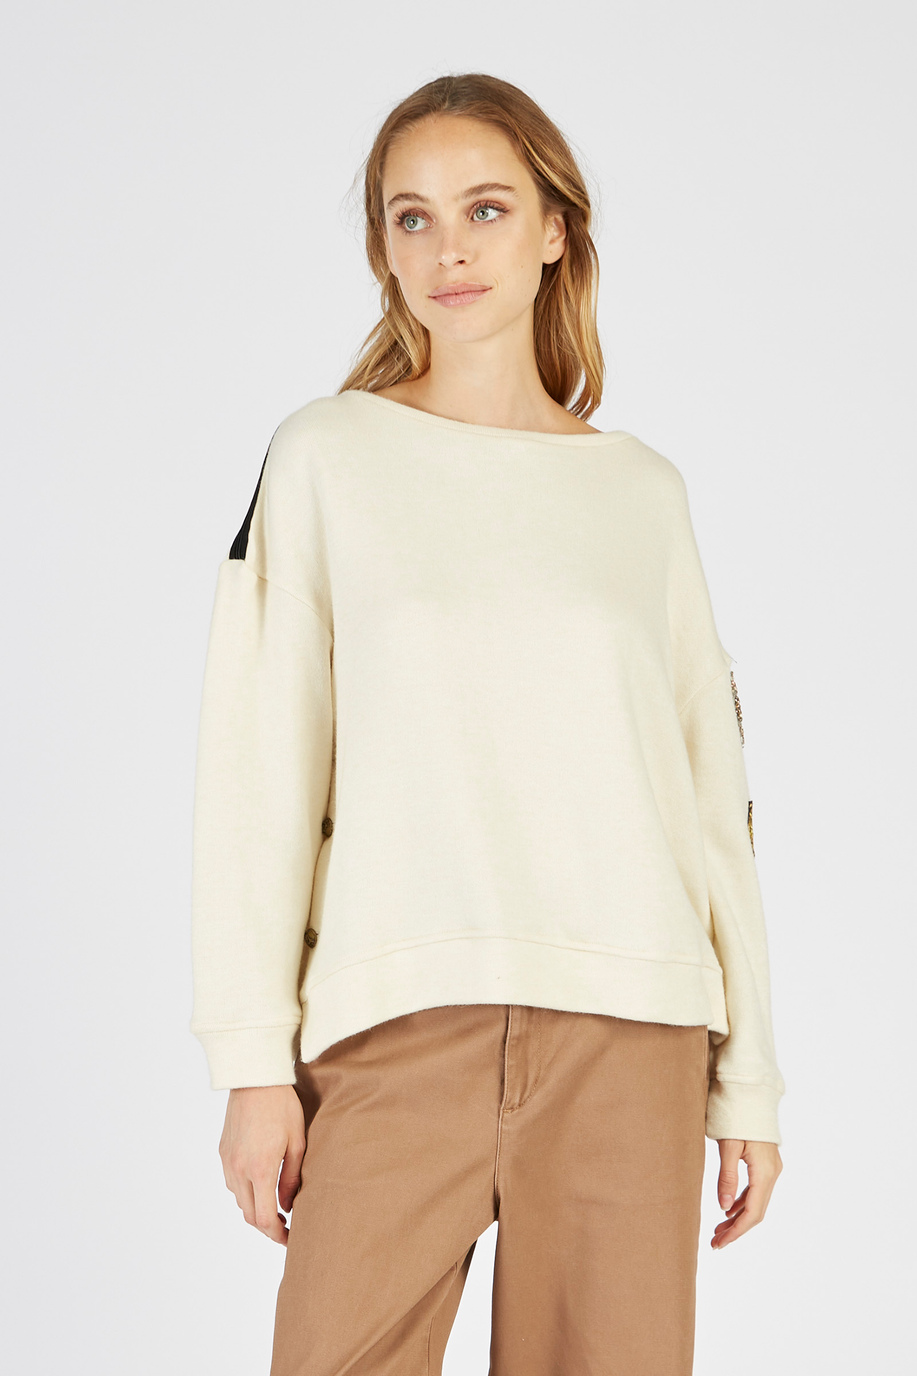 Women’s high neck sweatshirt and regular fit long sleeves - Autumn style | La Martina - Official Online Shop